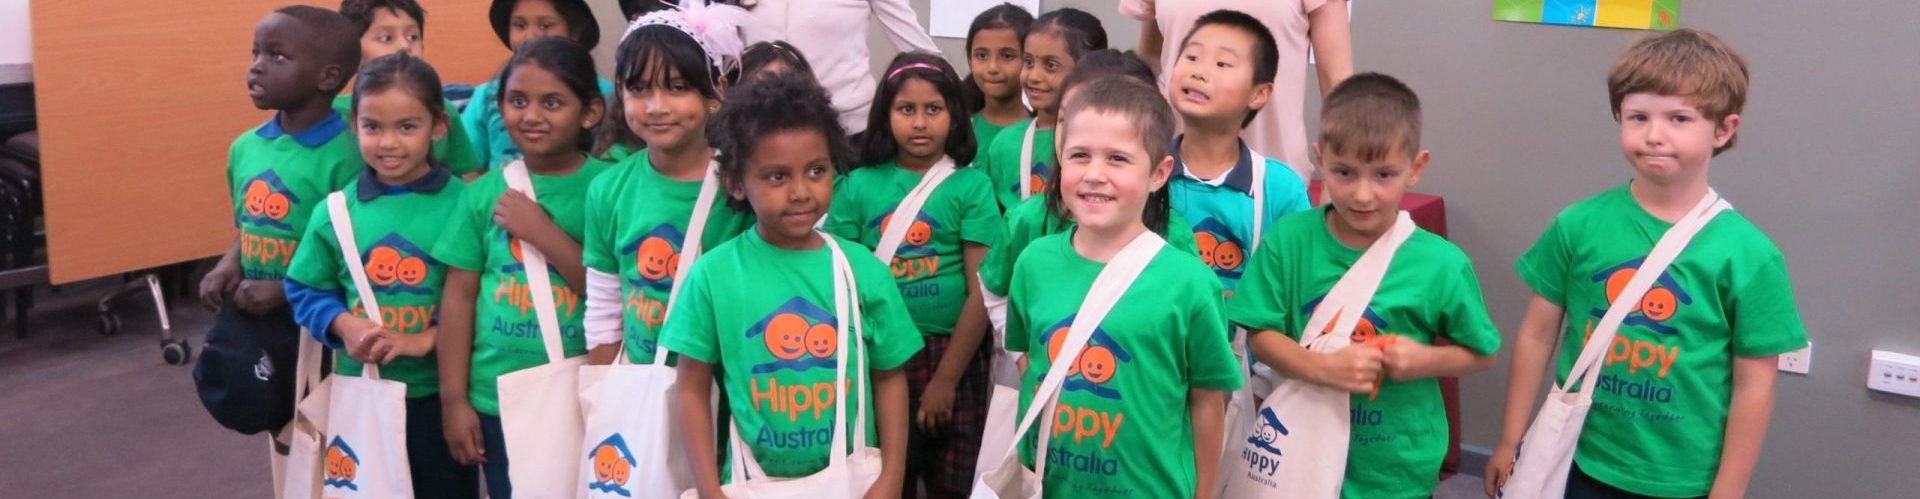 group of children wearing HIPPY program t-shirts smiling at camera